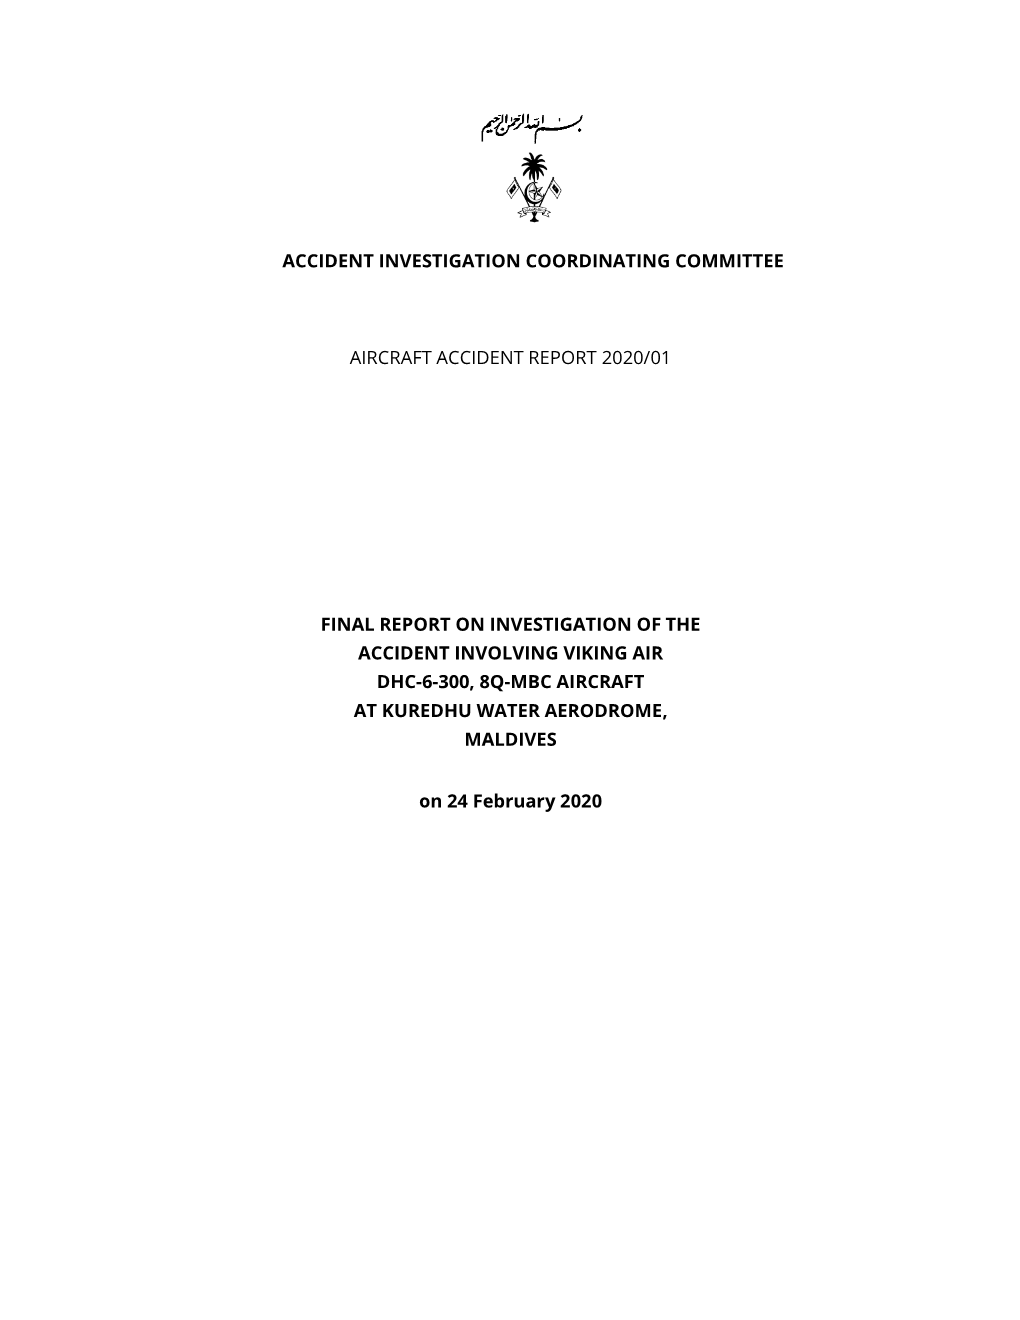 Final Report on Investigation of the Accident Involving Viking Air Dhc-6-300, 8Q-Mbc Aircraft at Kuredhu Water Aerodrome, Maldives